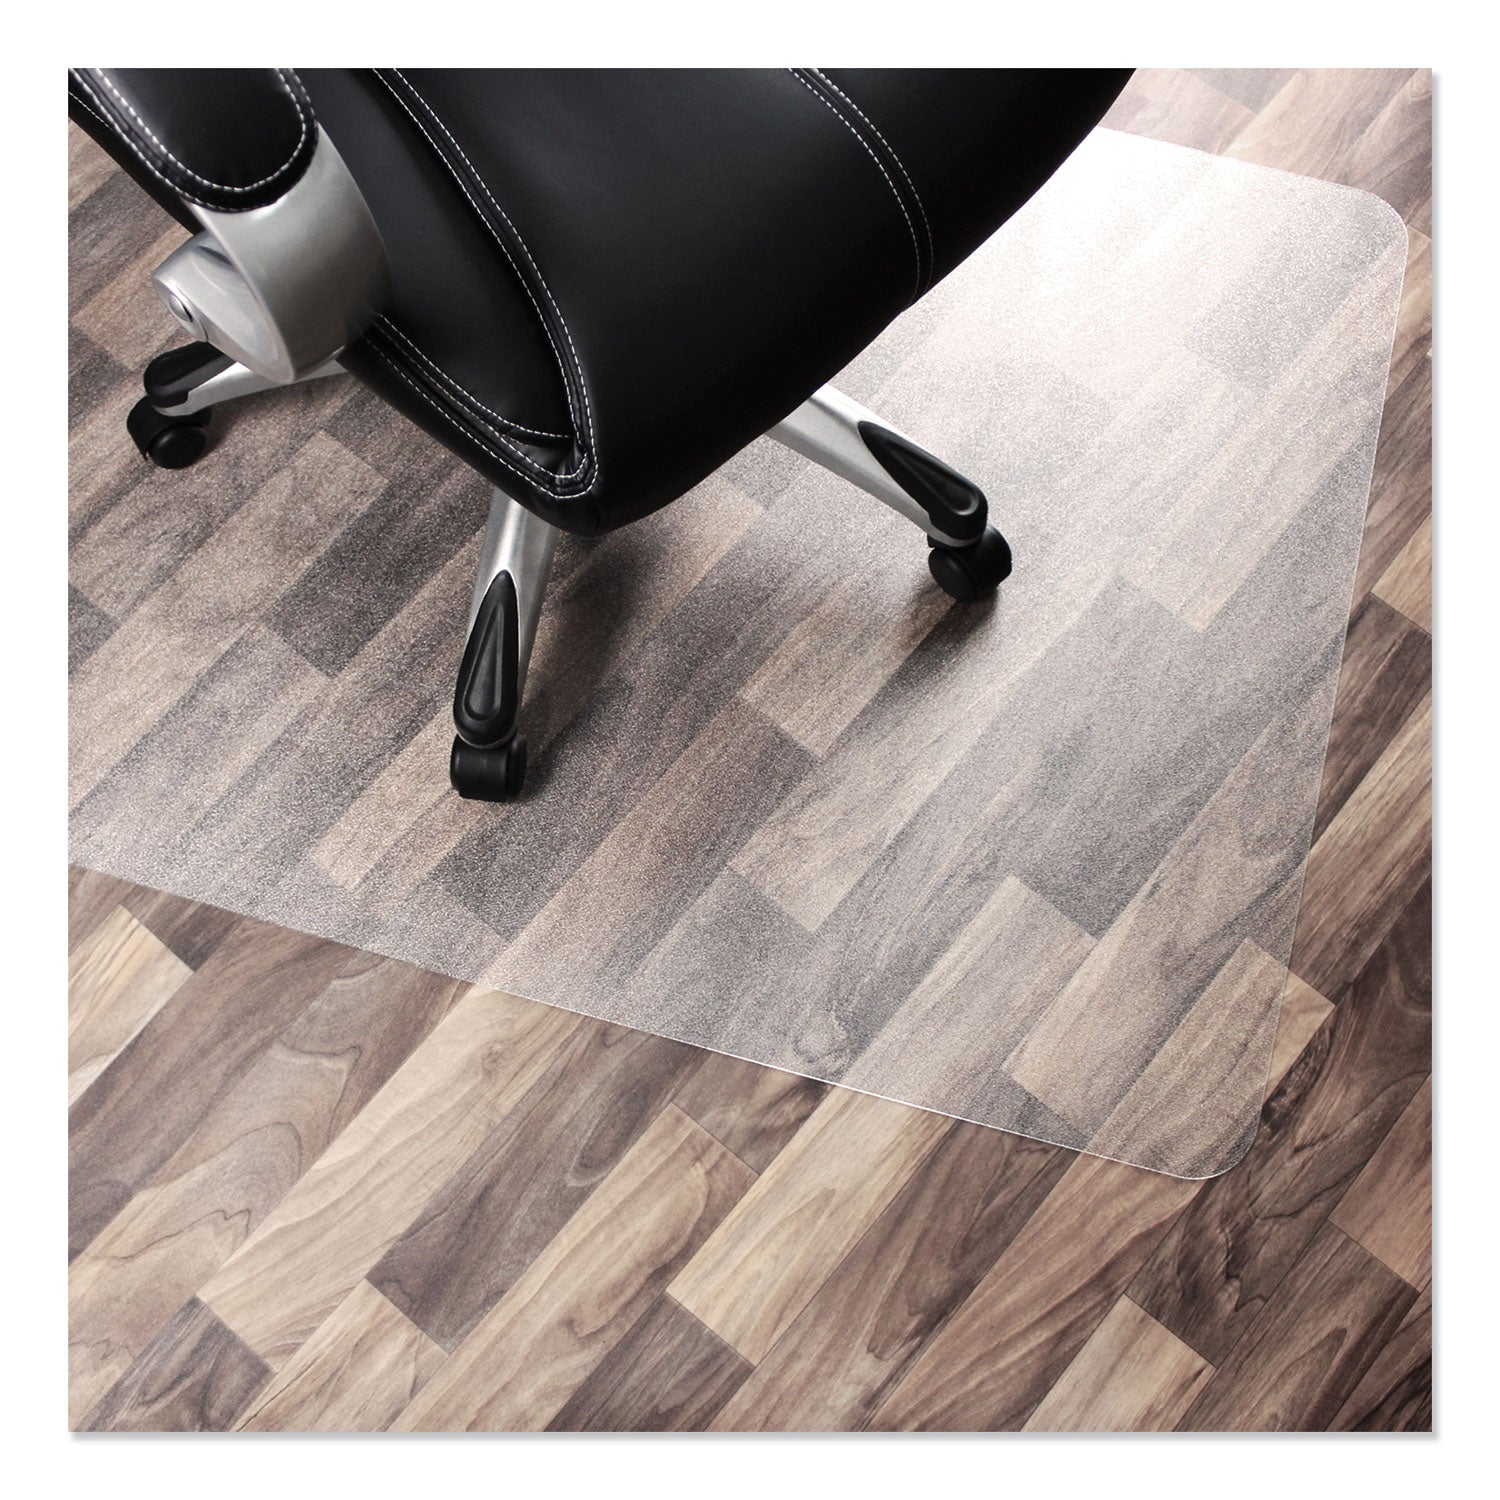 cleartex-unomat-anti-slip-chair-mat-for-hard-floors-flat-pile-carpets-35-x-47-clear_flrec128920era - 2